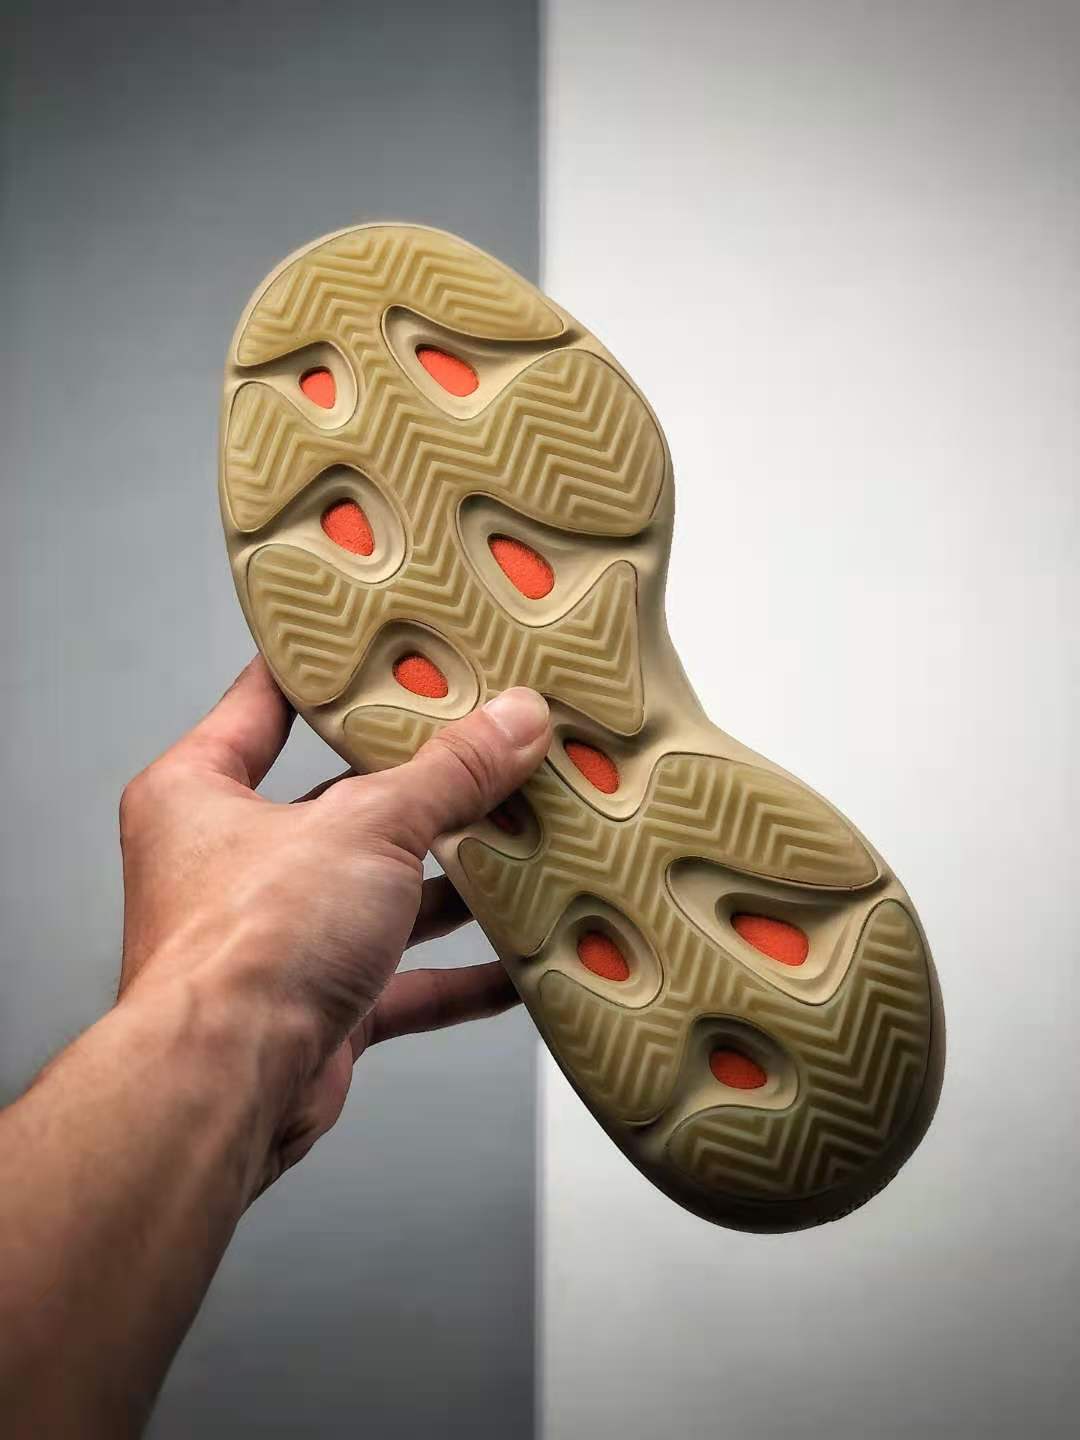 Adidas Yeezy 700 V3 'Safflower' G54853 - Stylish and Comfortable Footwear